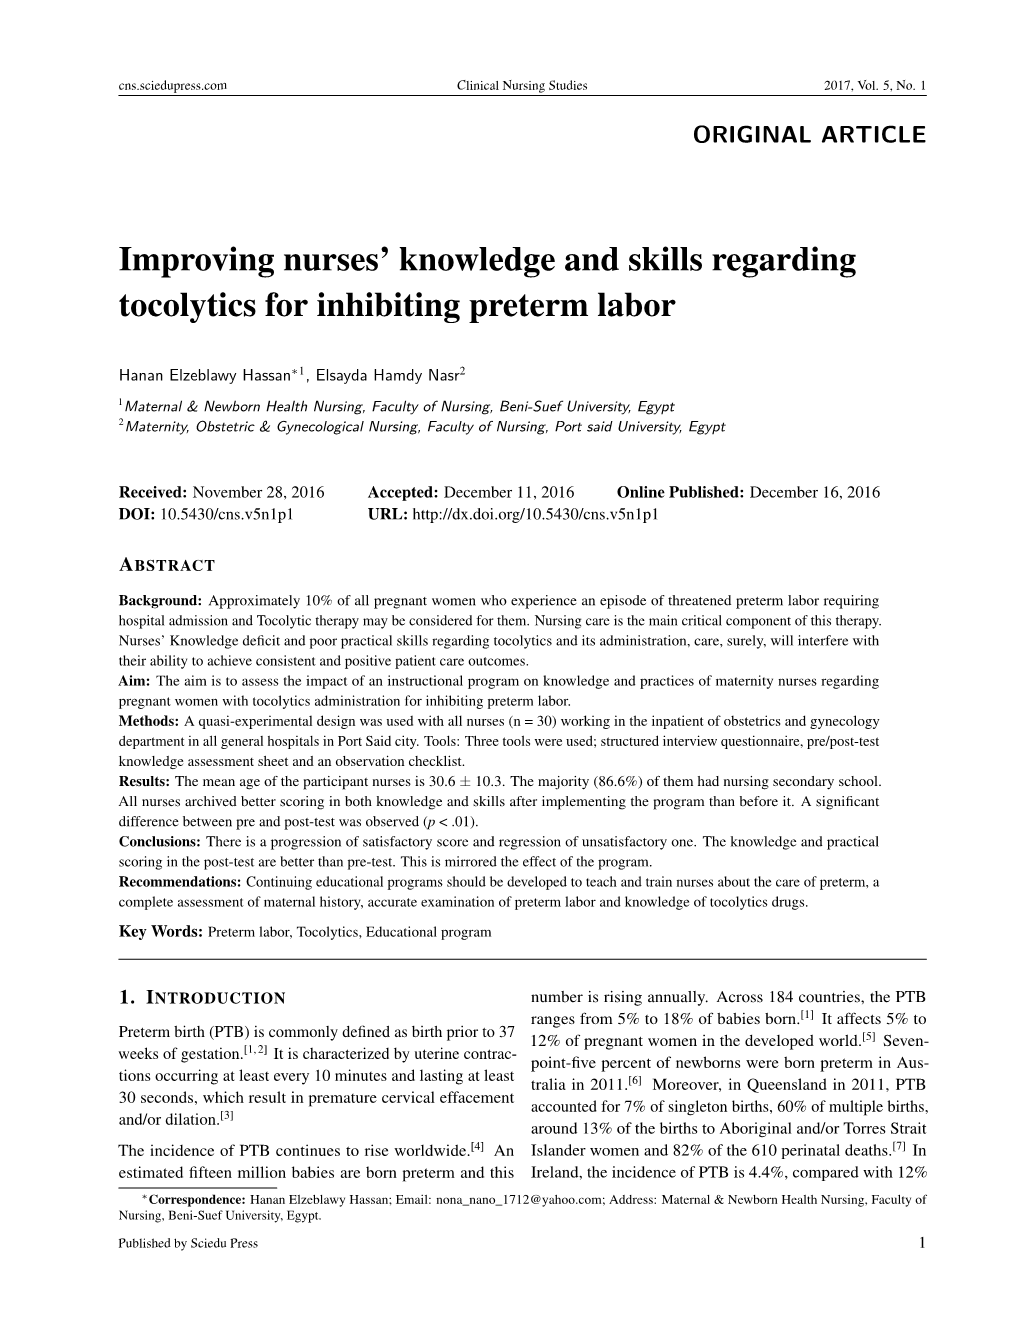 Improving Nurses' Knowledge and Skills Regarding